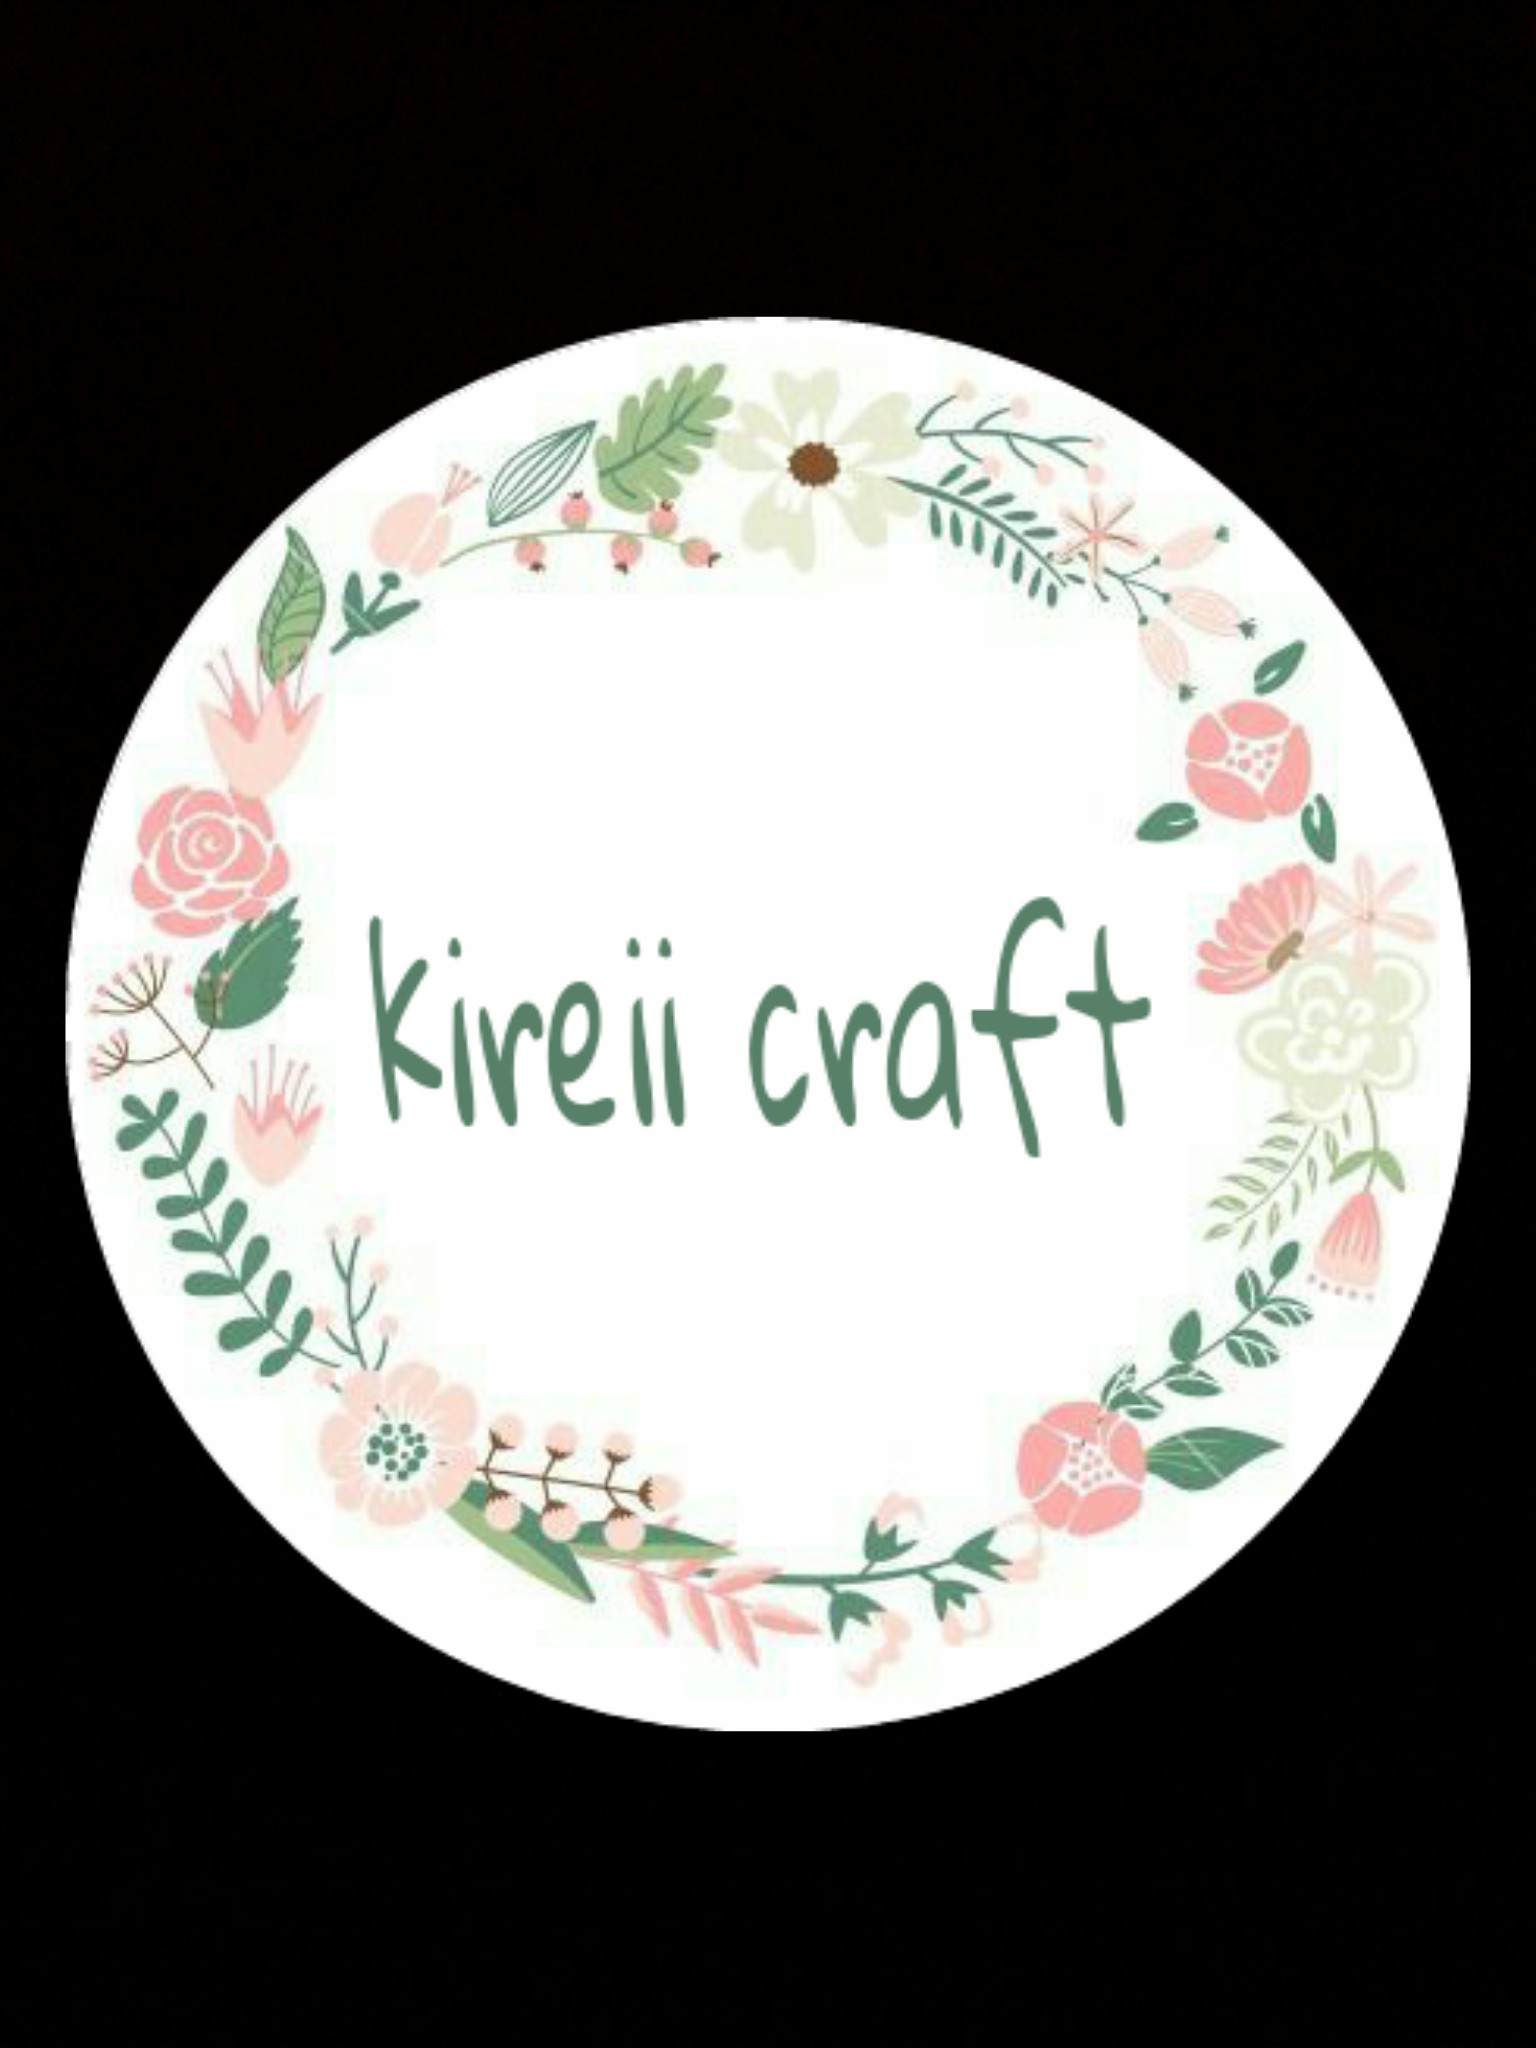 Kireii craft